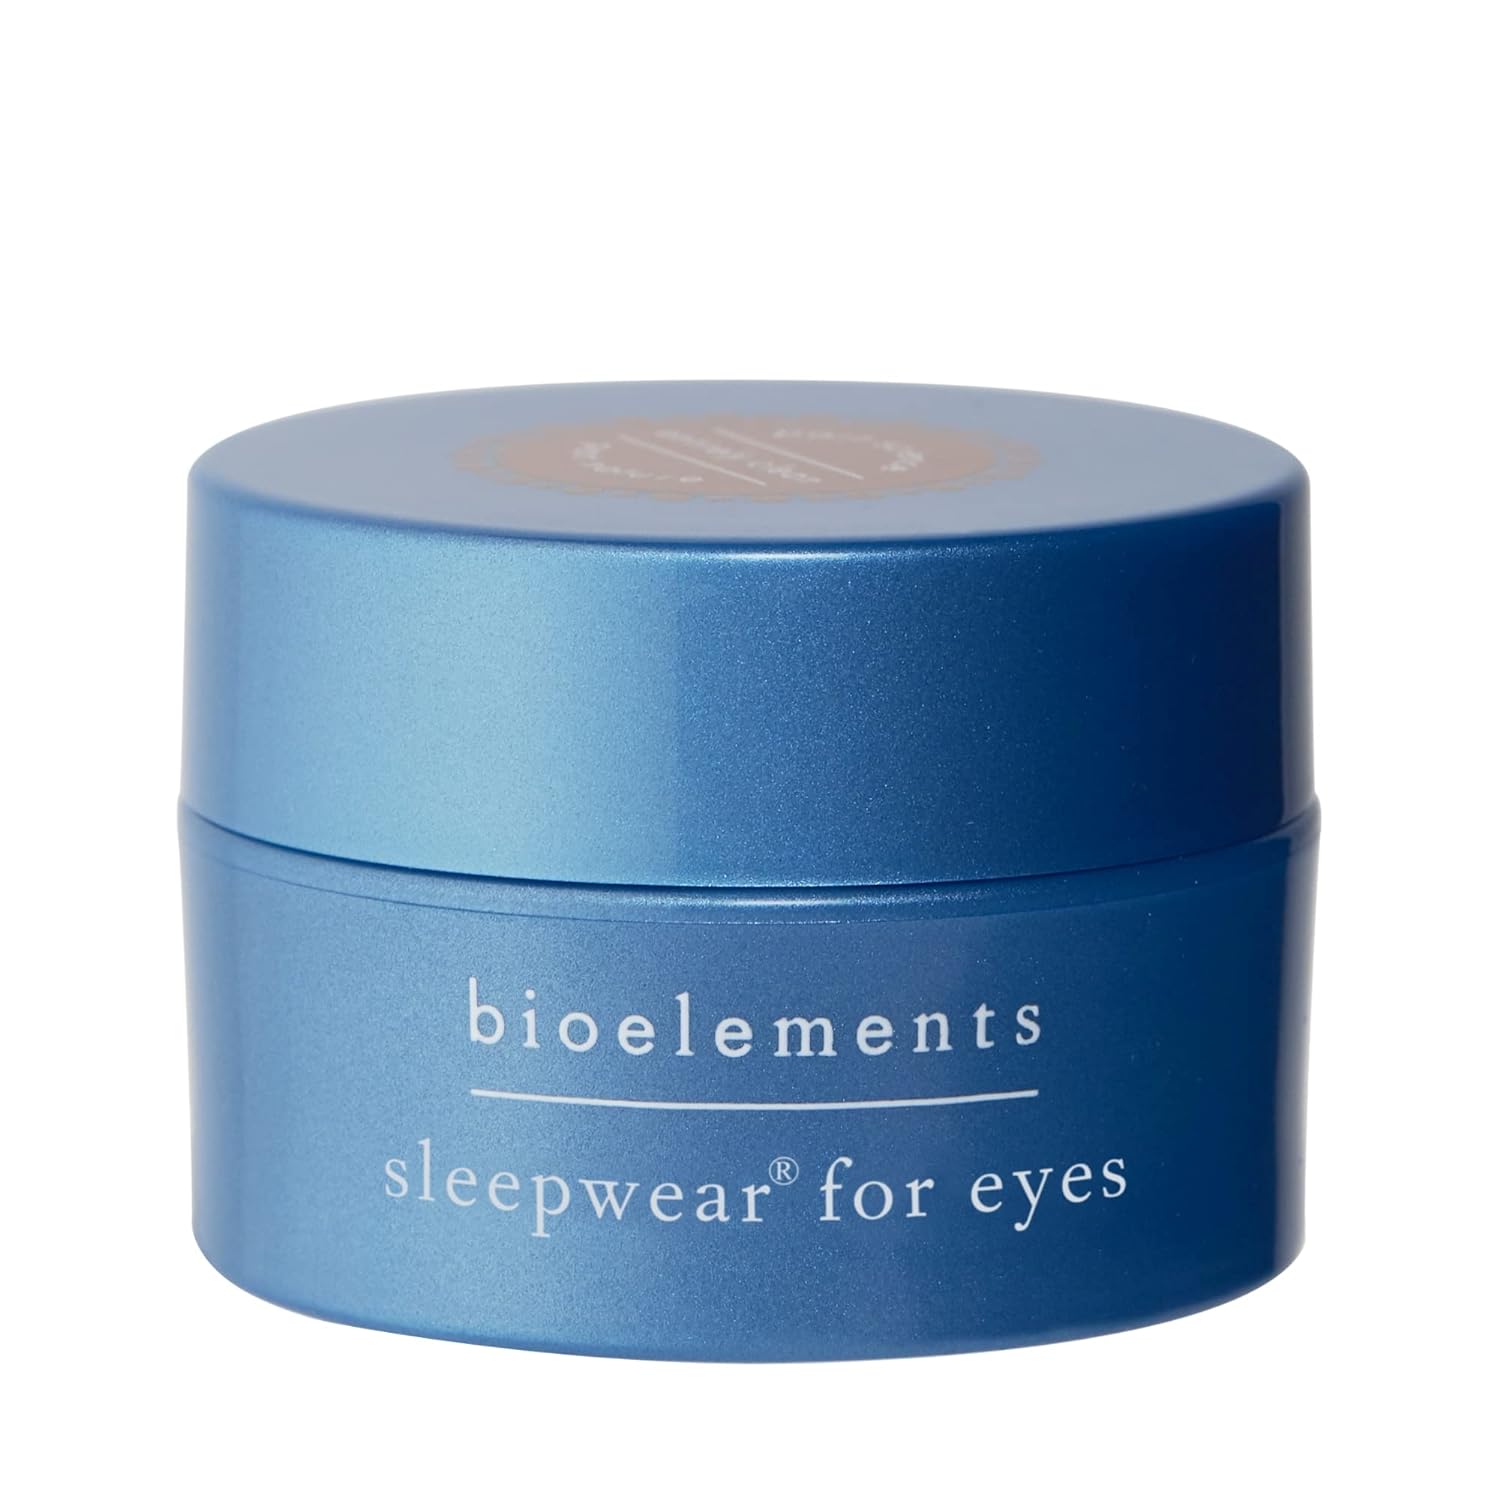 Bioelements Sleepwear for Eyes - 0.5   - Night Anti-Aging Eye Cream - Moisturize, Hydrate & Reduce Appearance of Fine Lines & Wrinkles - Vegan, Gluten Free - Never Tested on Animals